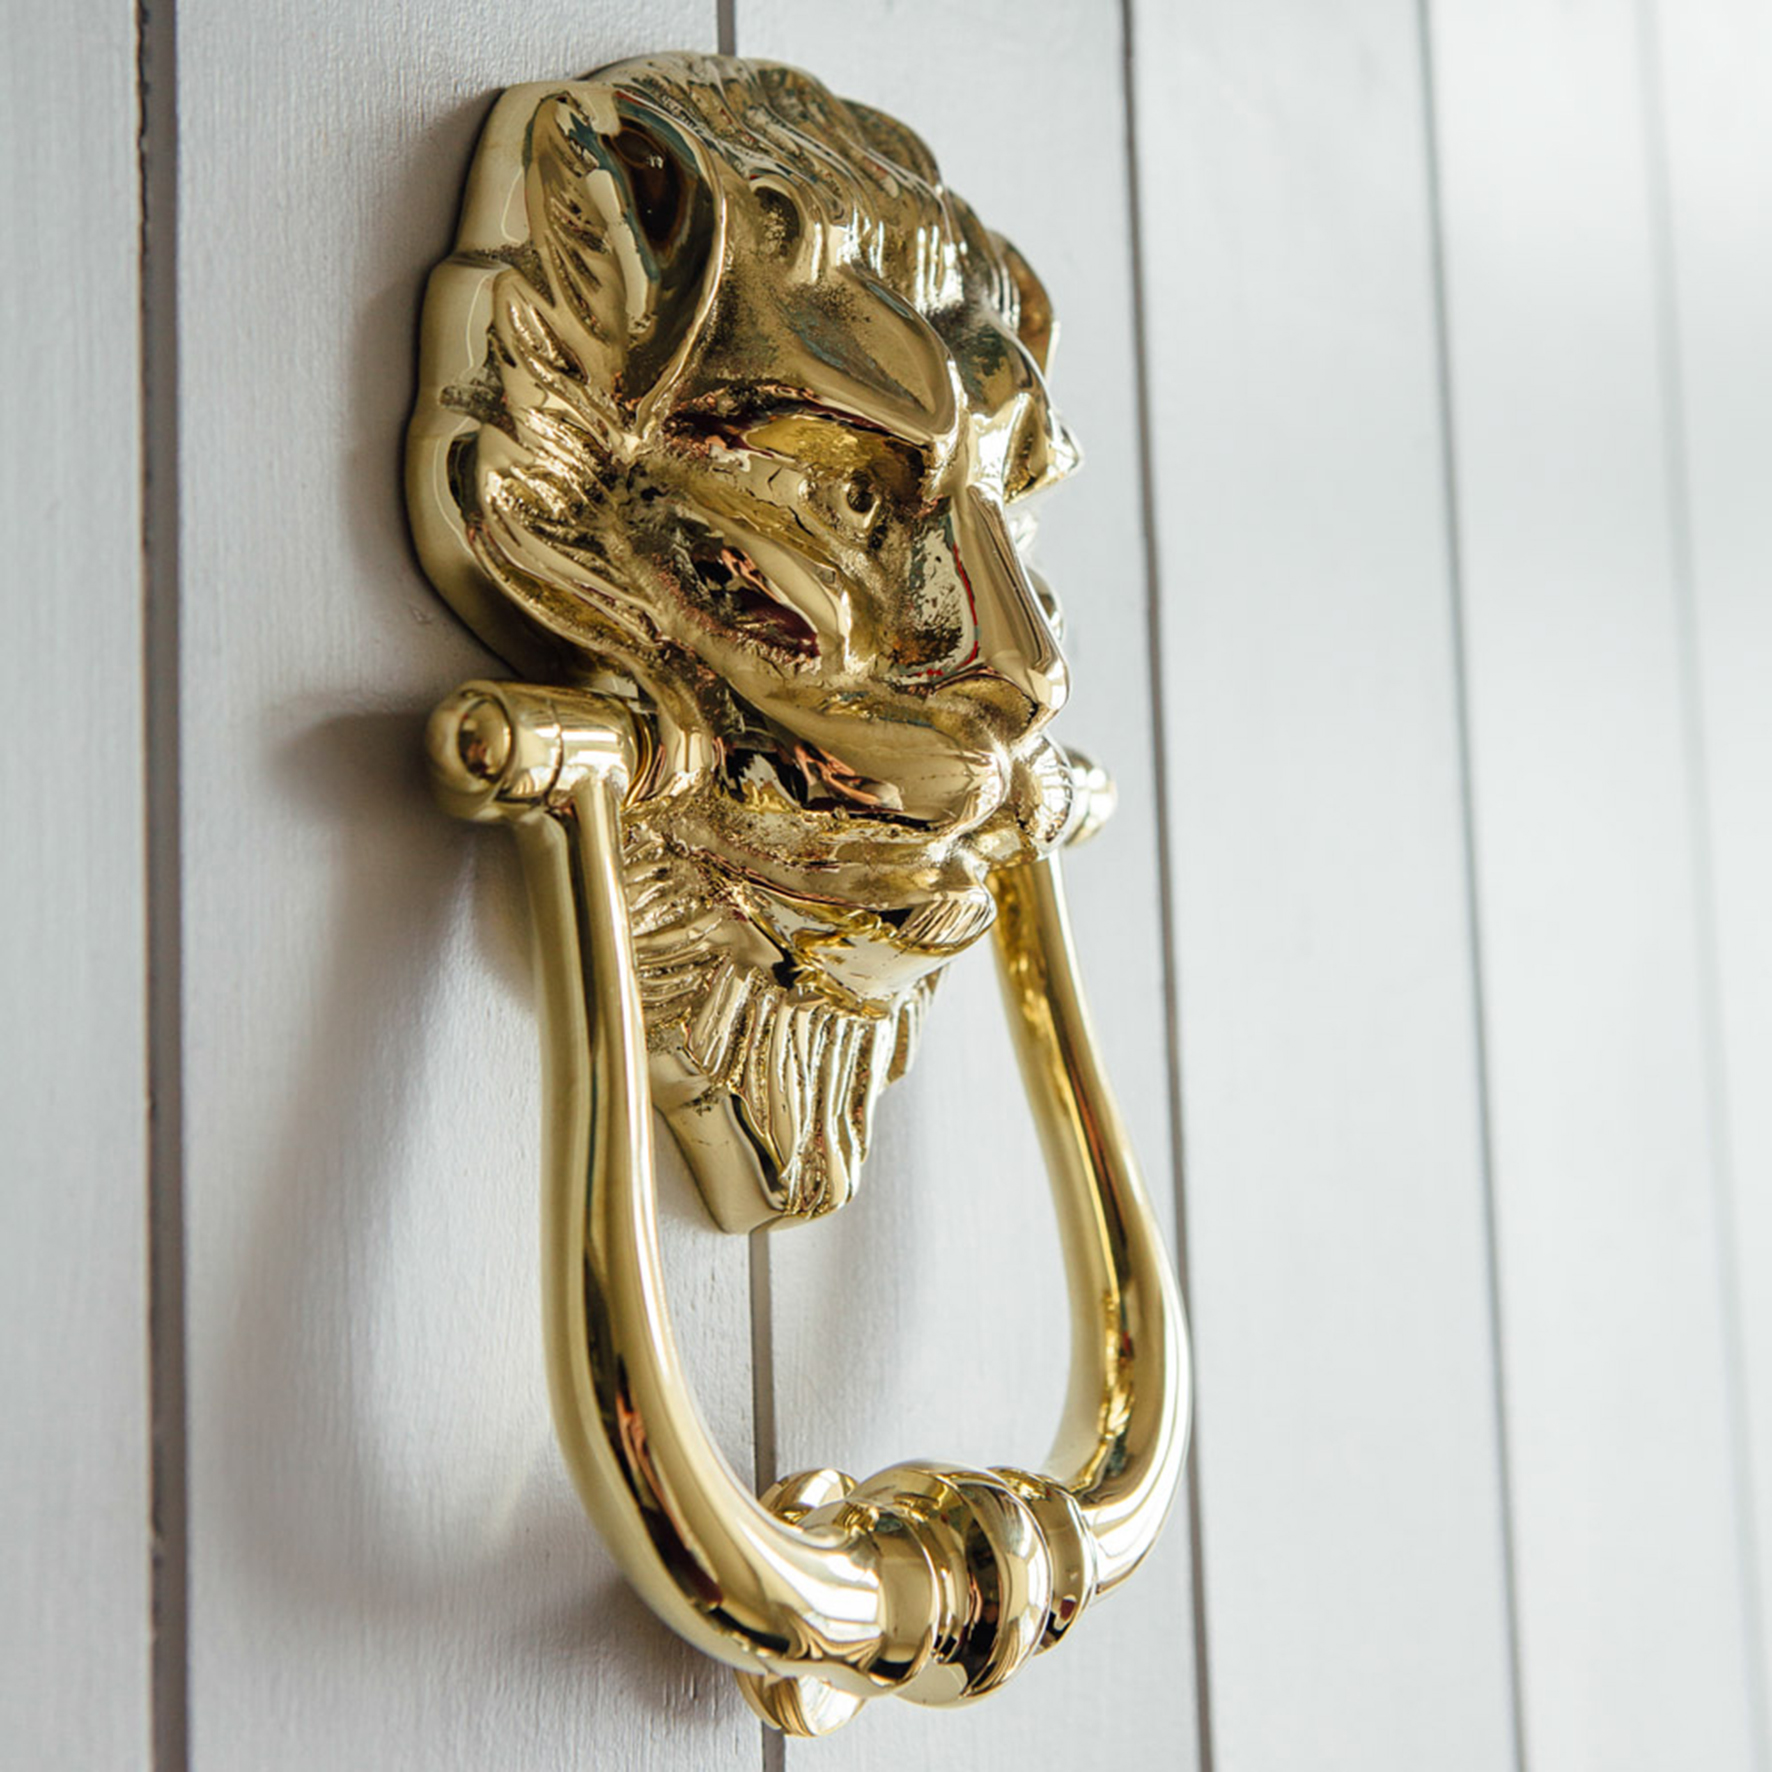 Empire lion's head door knocker, brass, £66.50, Grace & Glory Home (Grace & Glory Home/PA)